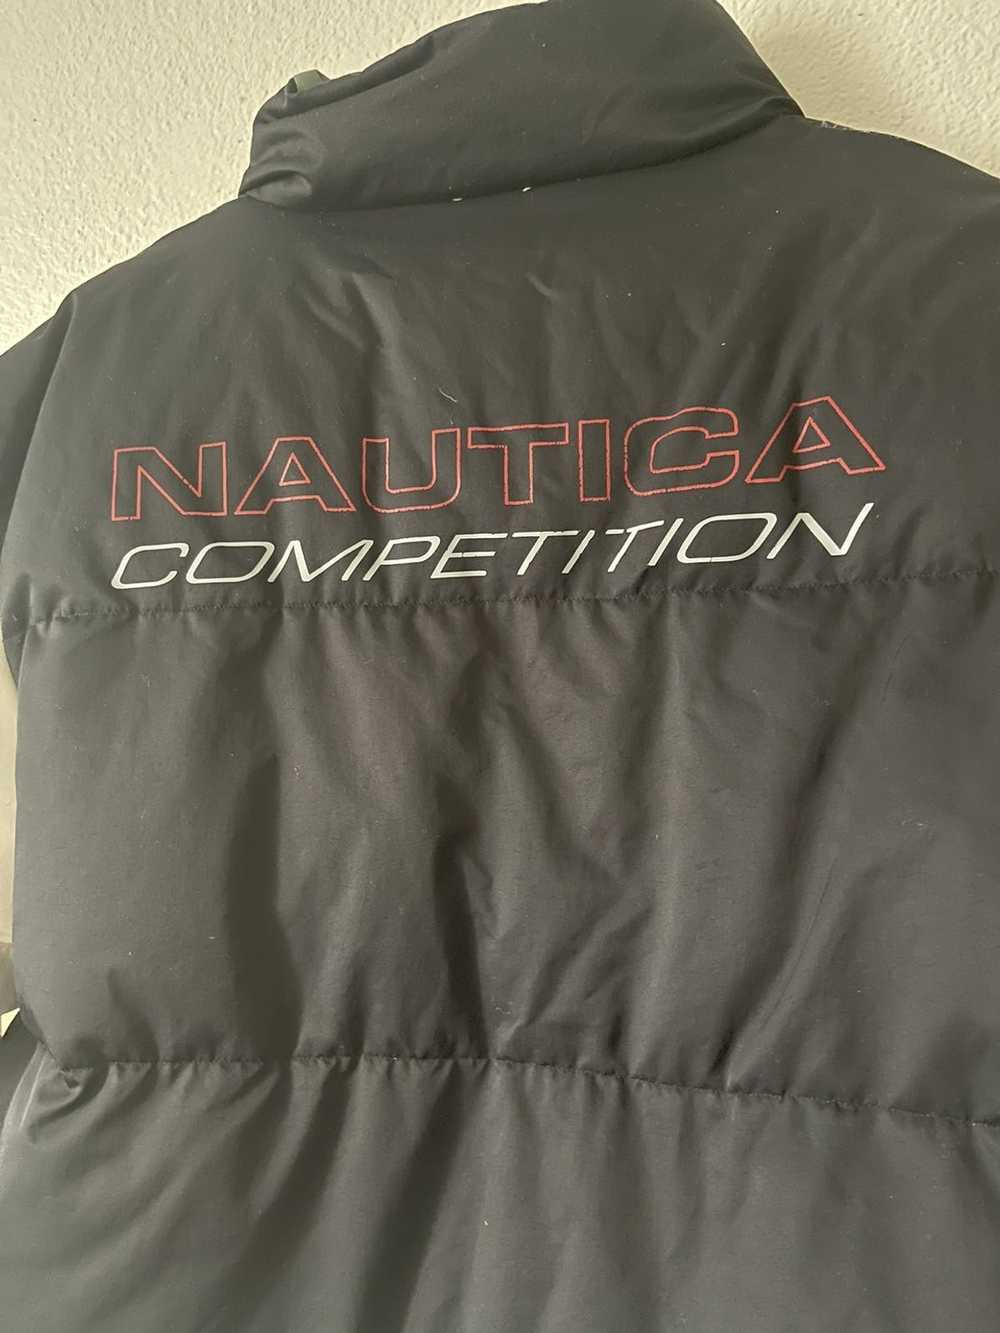 Nautica Nautica competition puffer - image 5